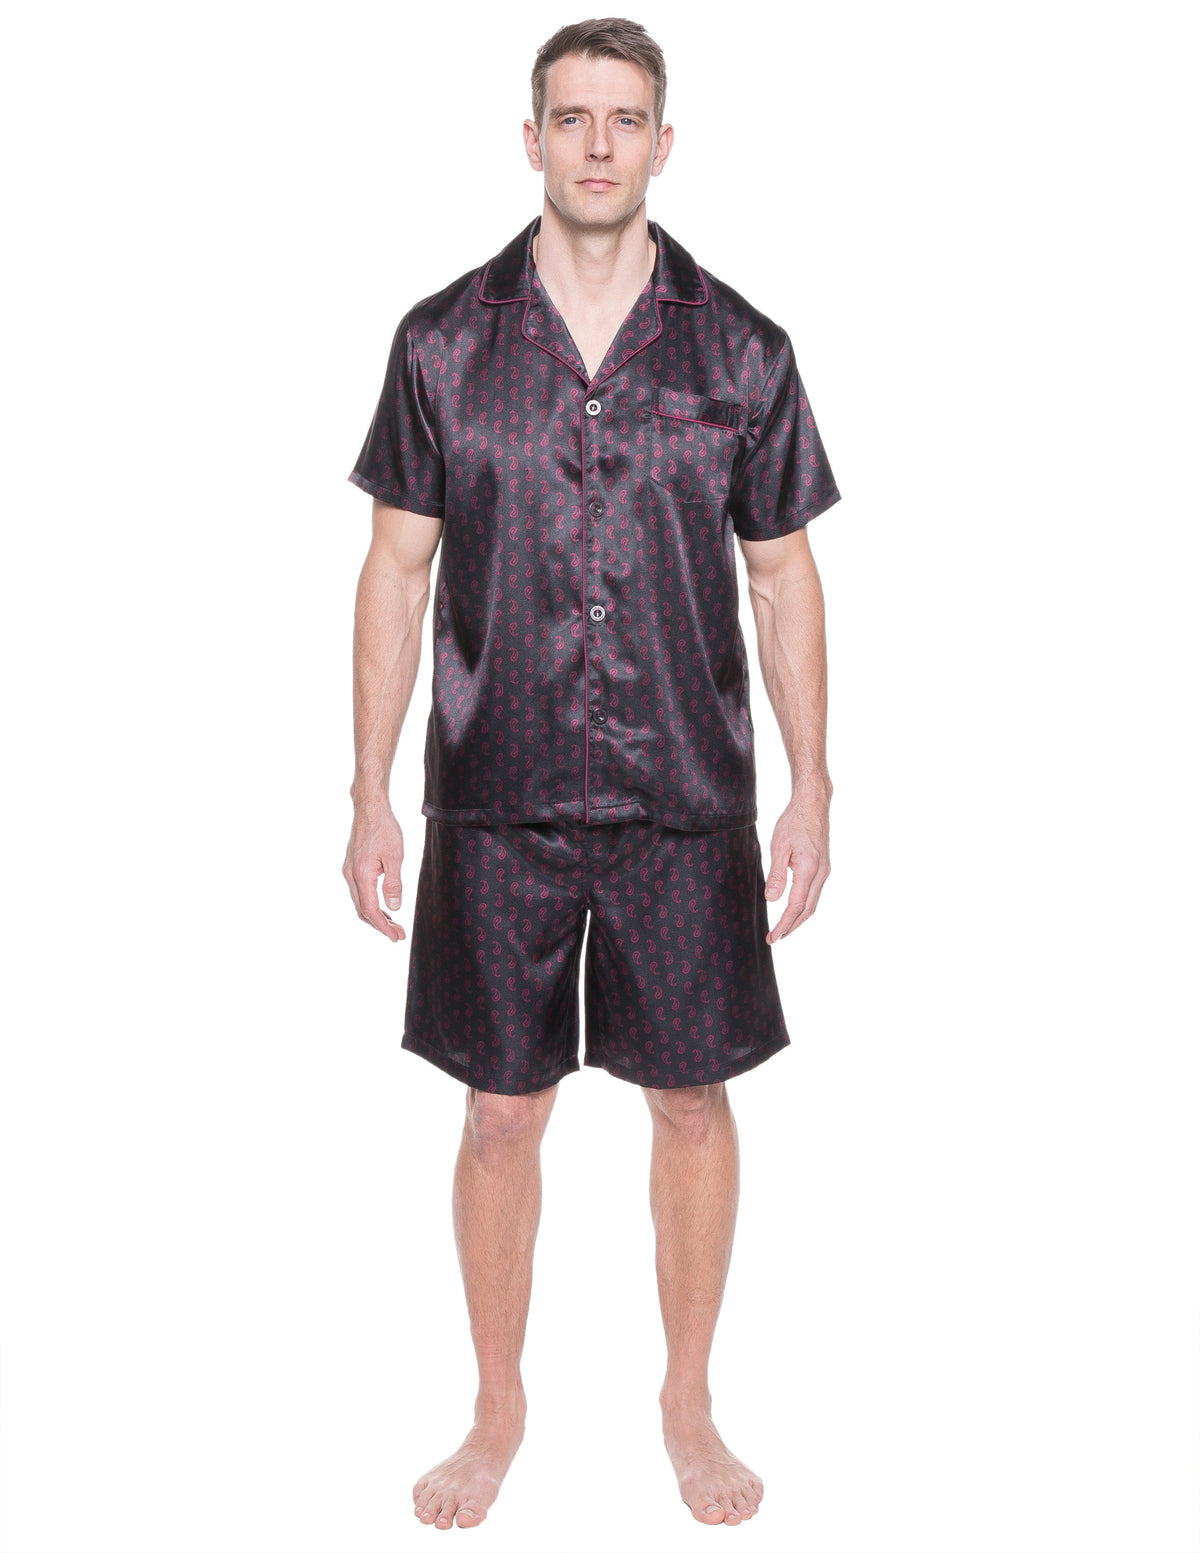 Mens Satin Short Sleepwear/Pajama Set - Paisley Black/Fig